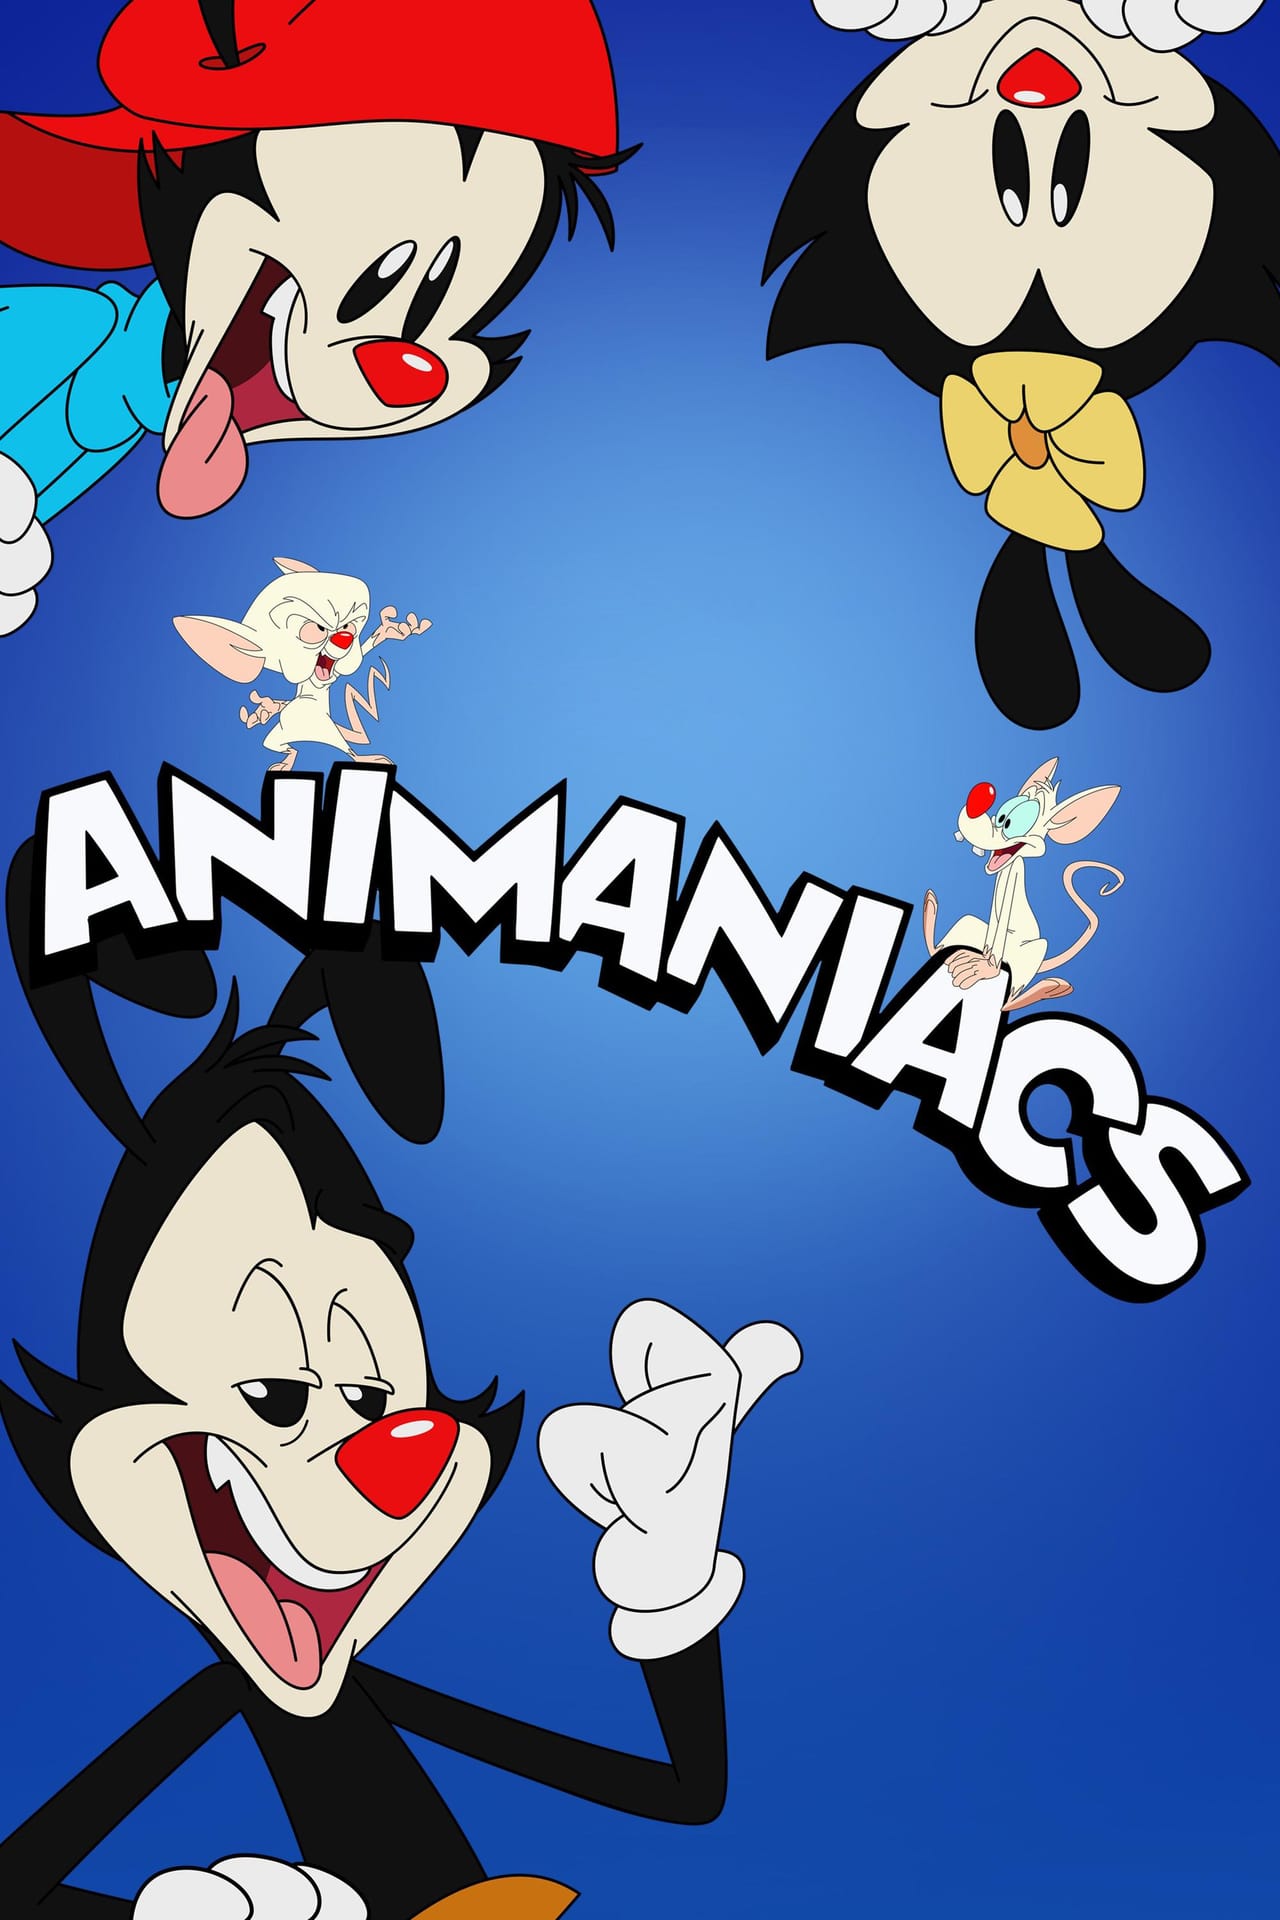 Animaniacs (season 1)